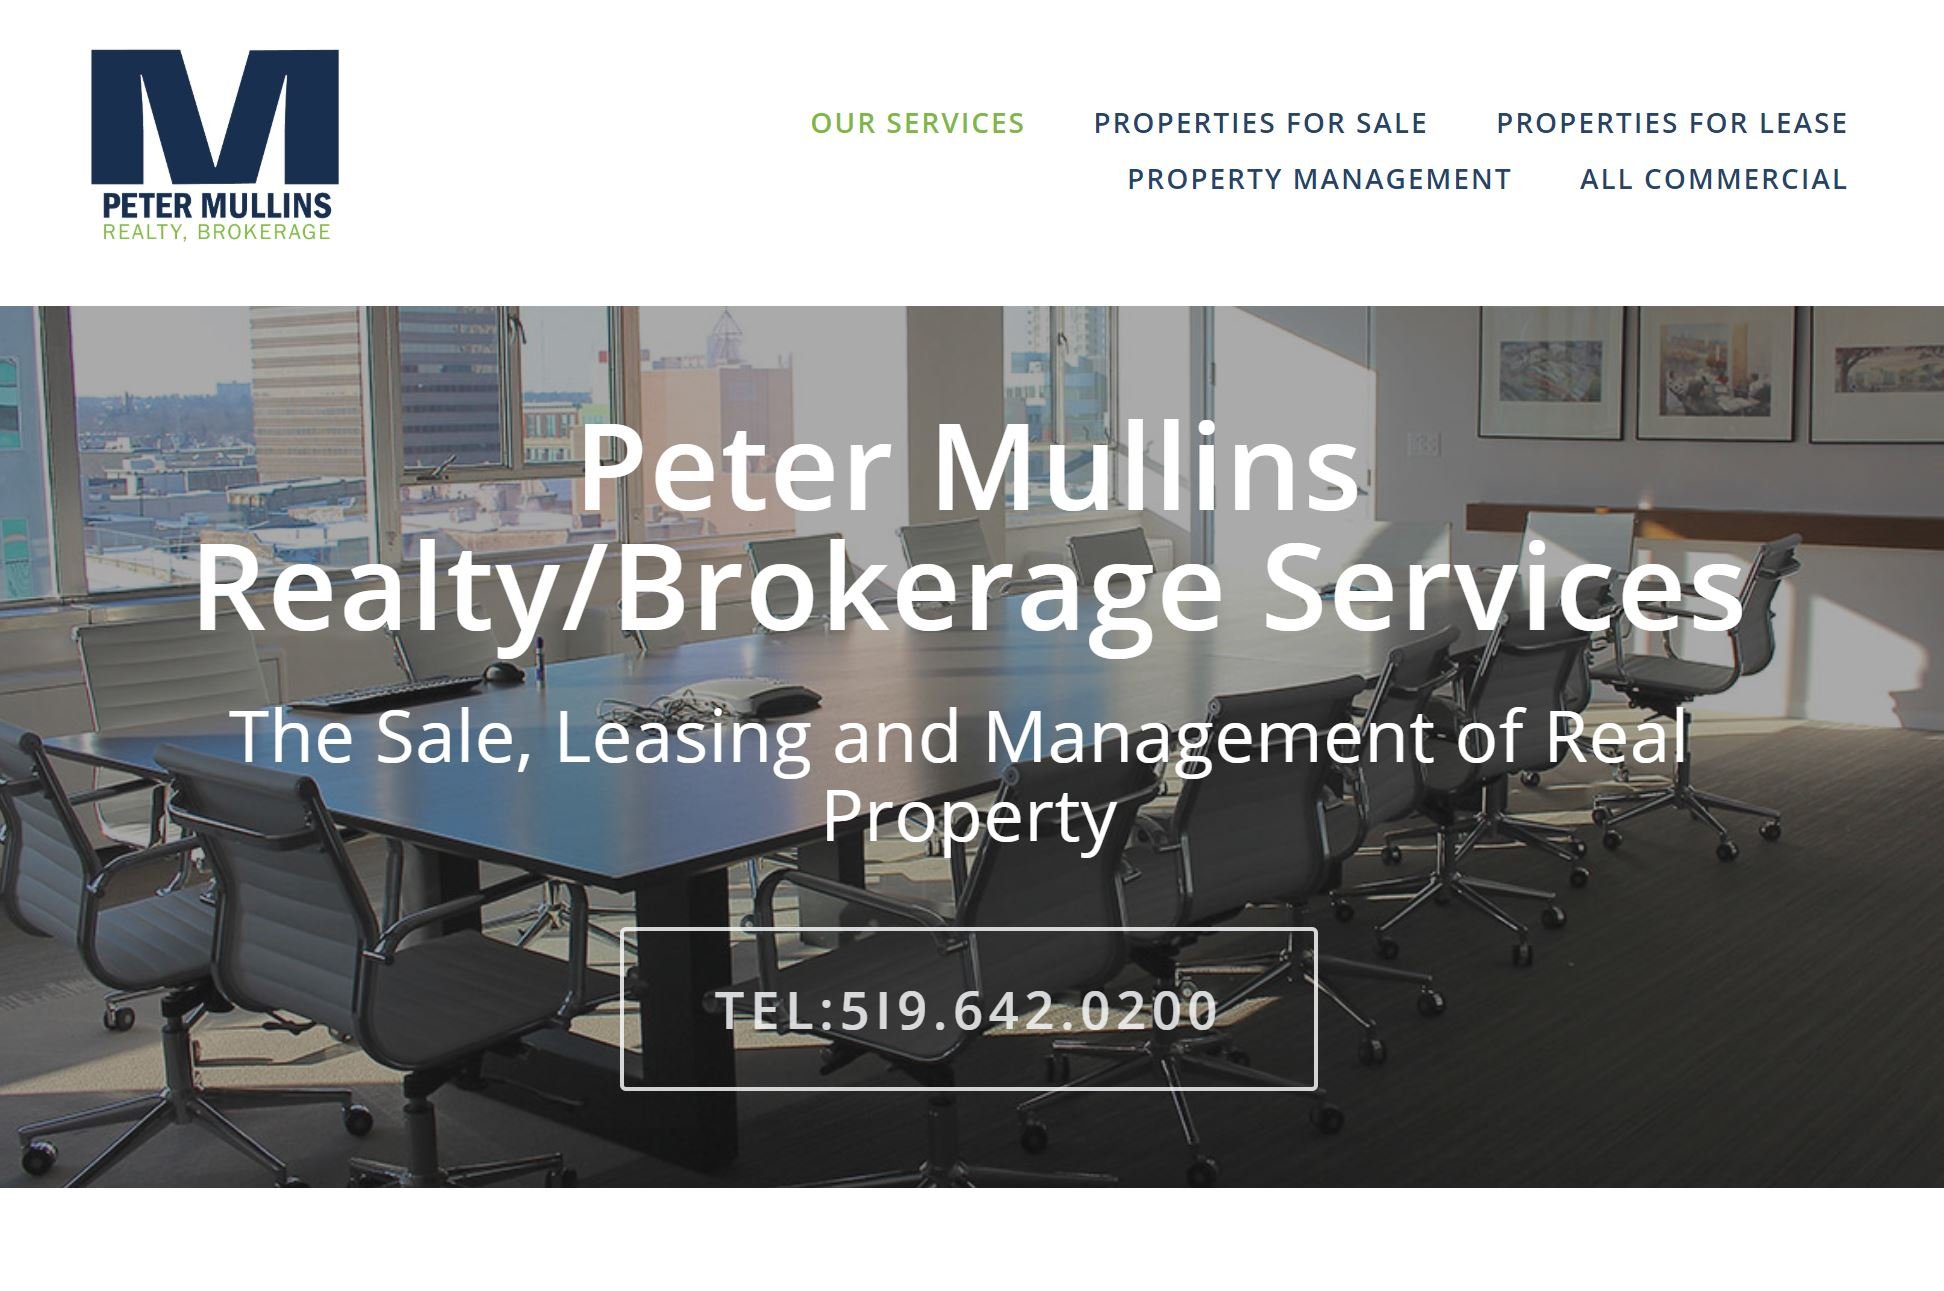 Peter Mullins Realty/Brokerage Services